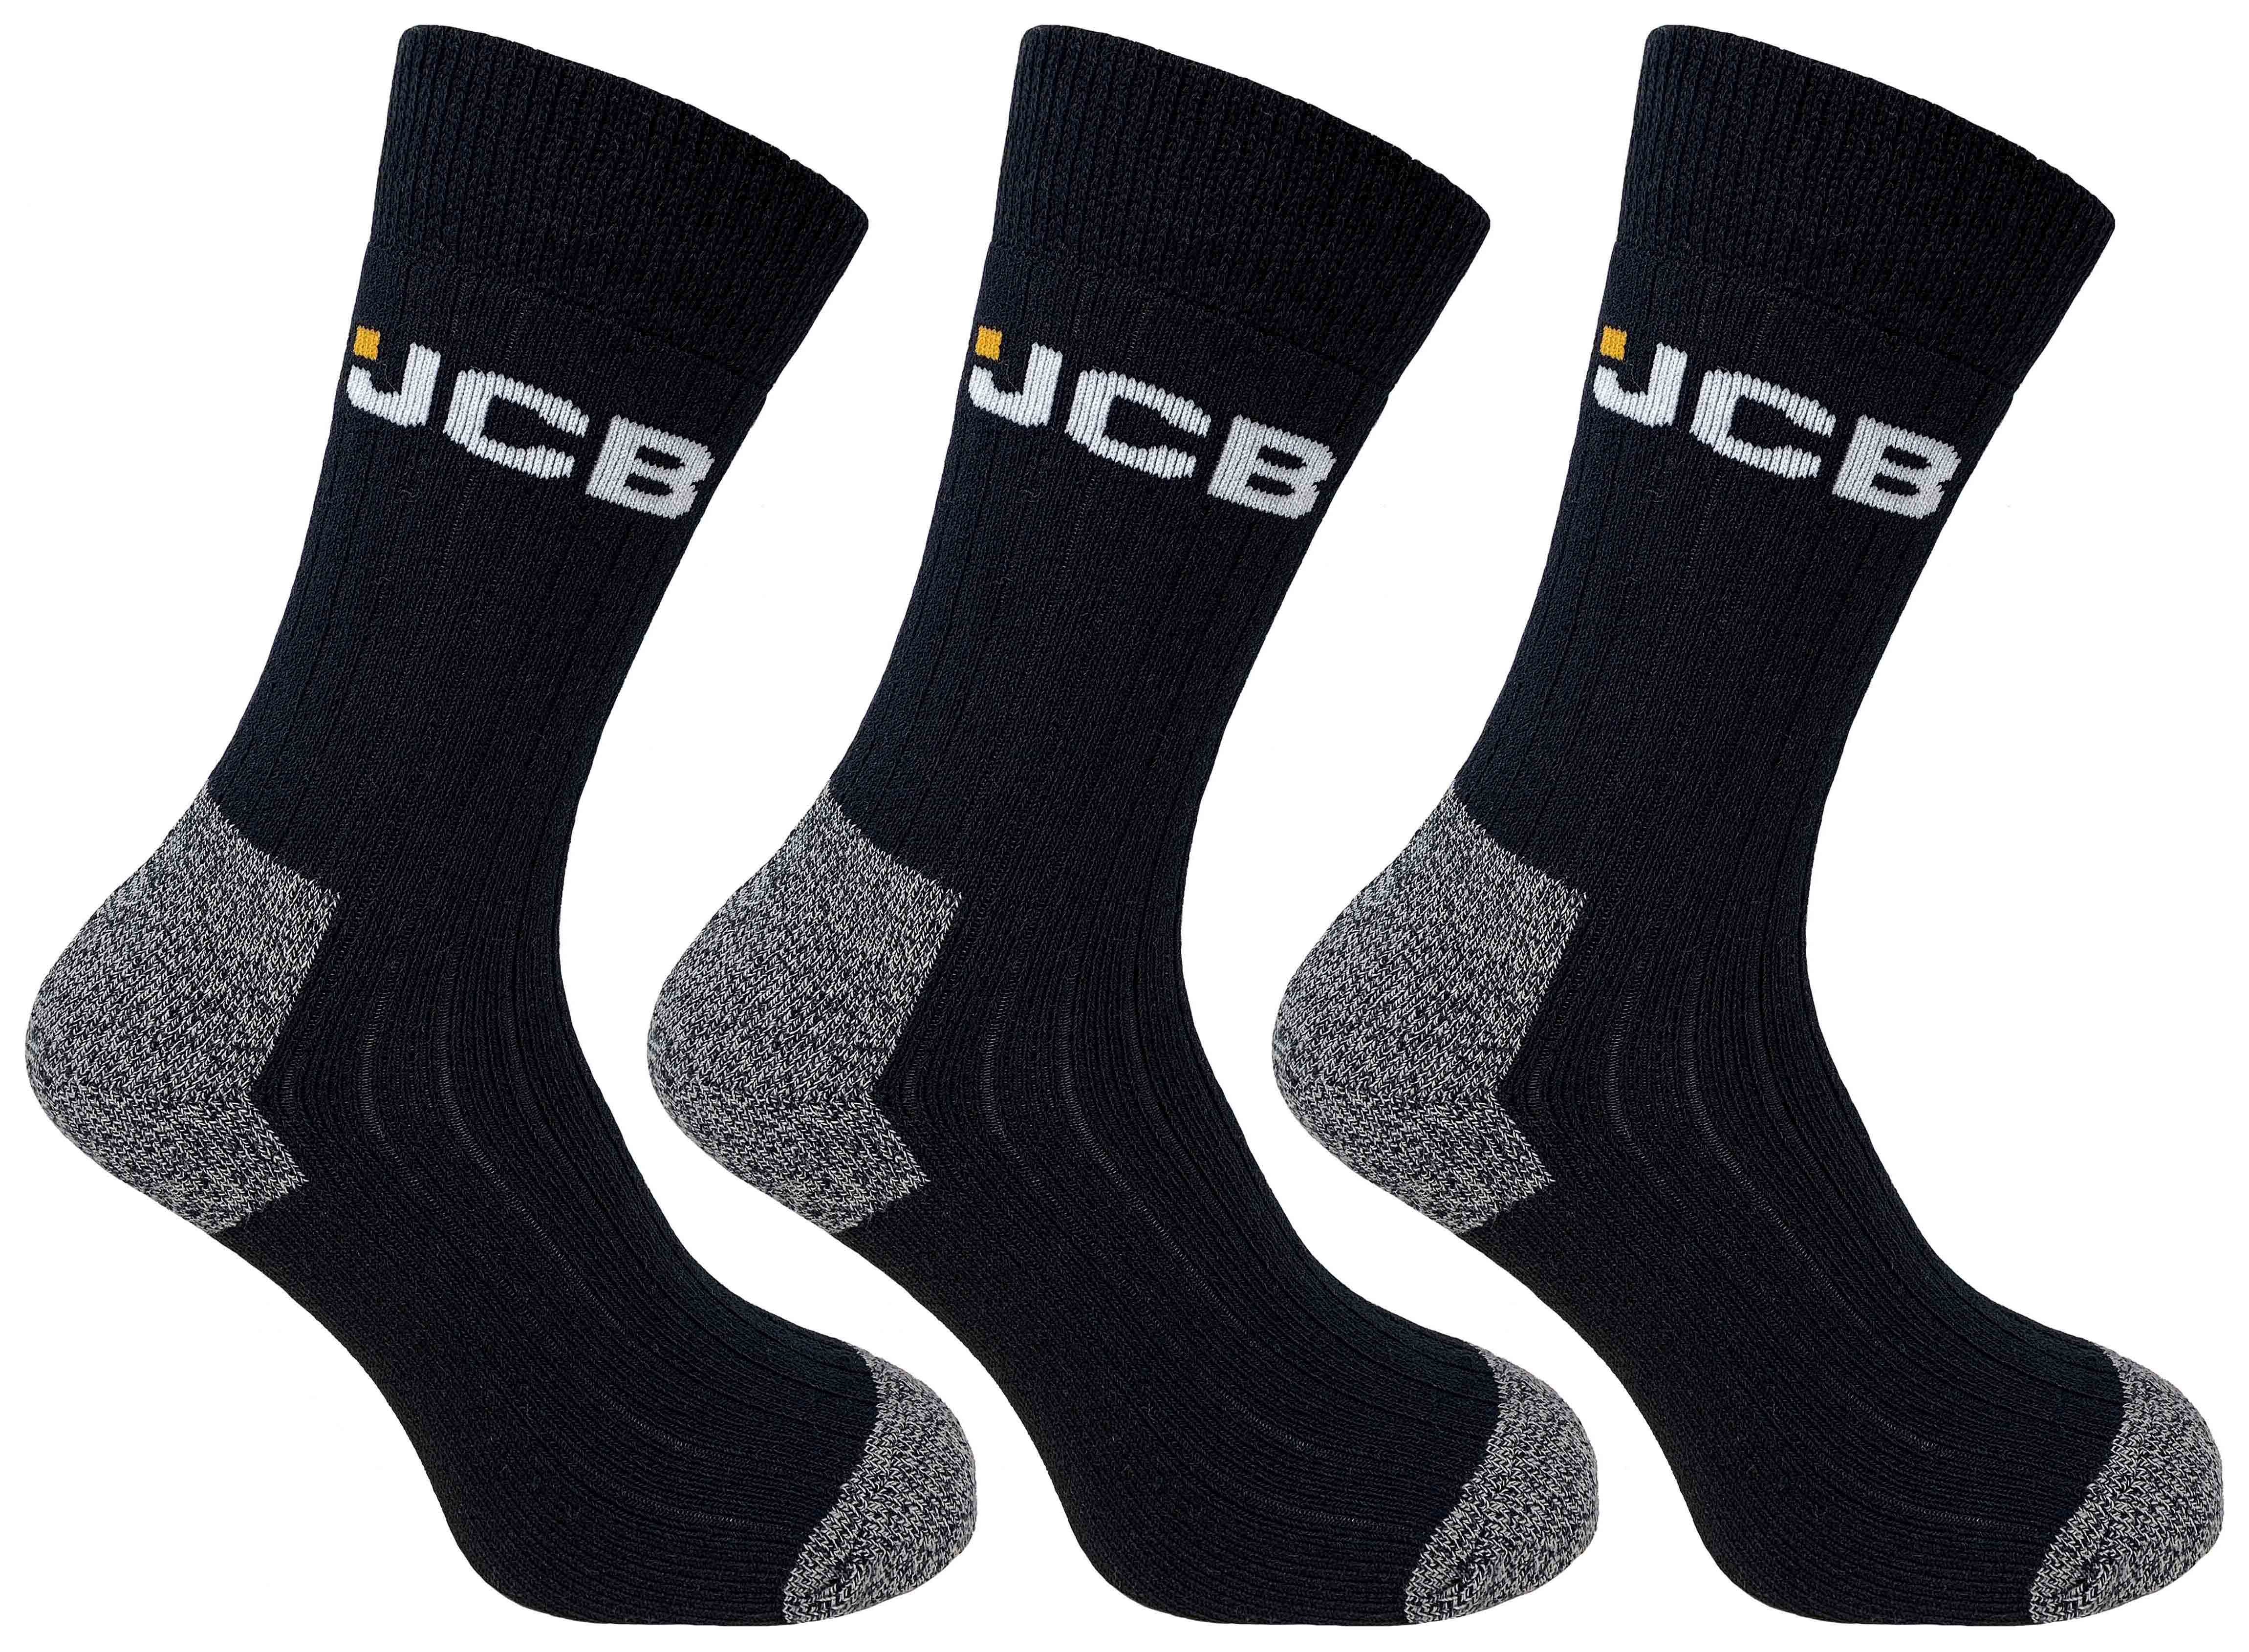 Image of JCB JCBX000025 Workwear Apparel Socks Pack of 3 Size 6 - 11